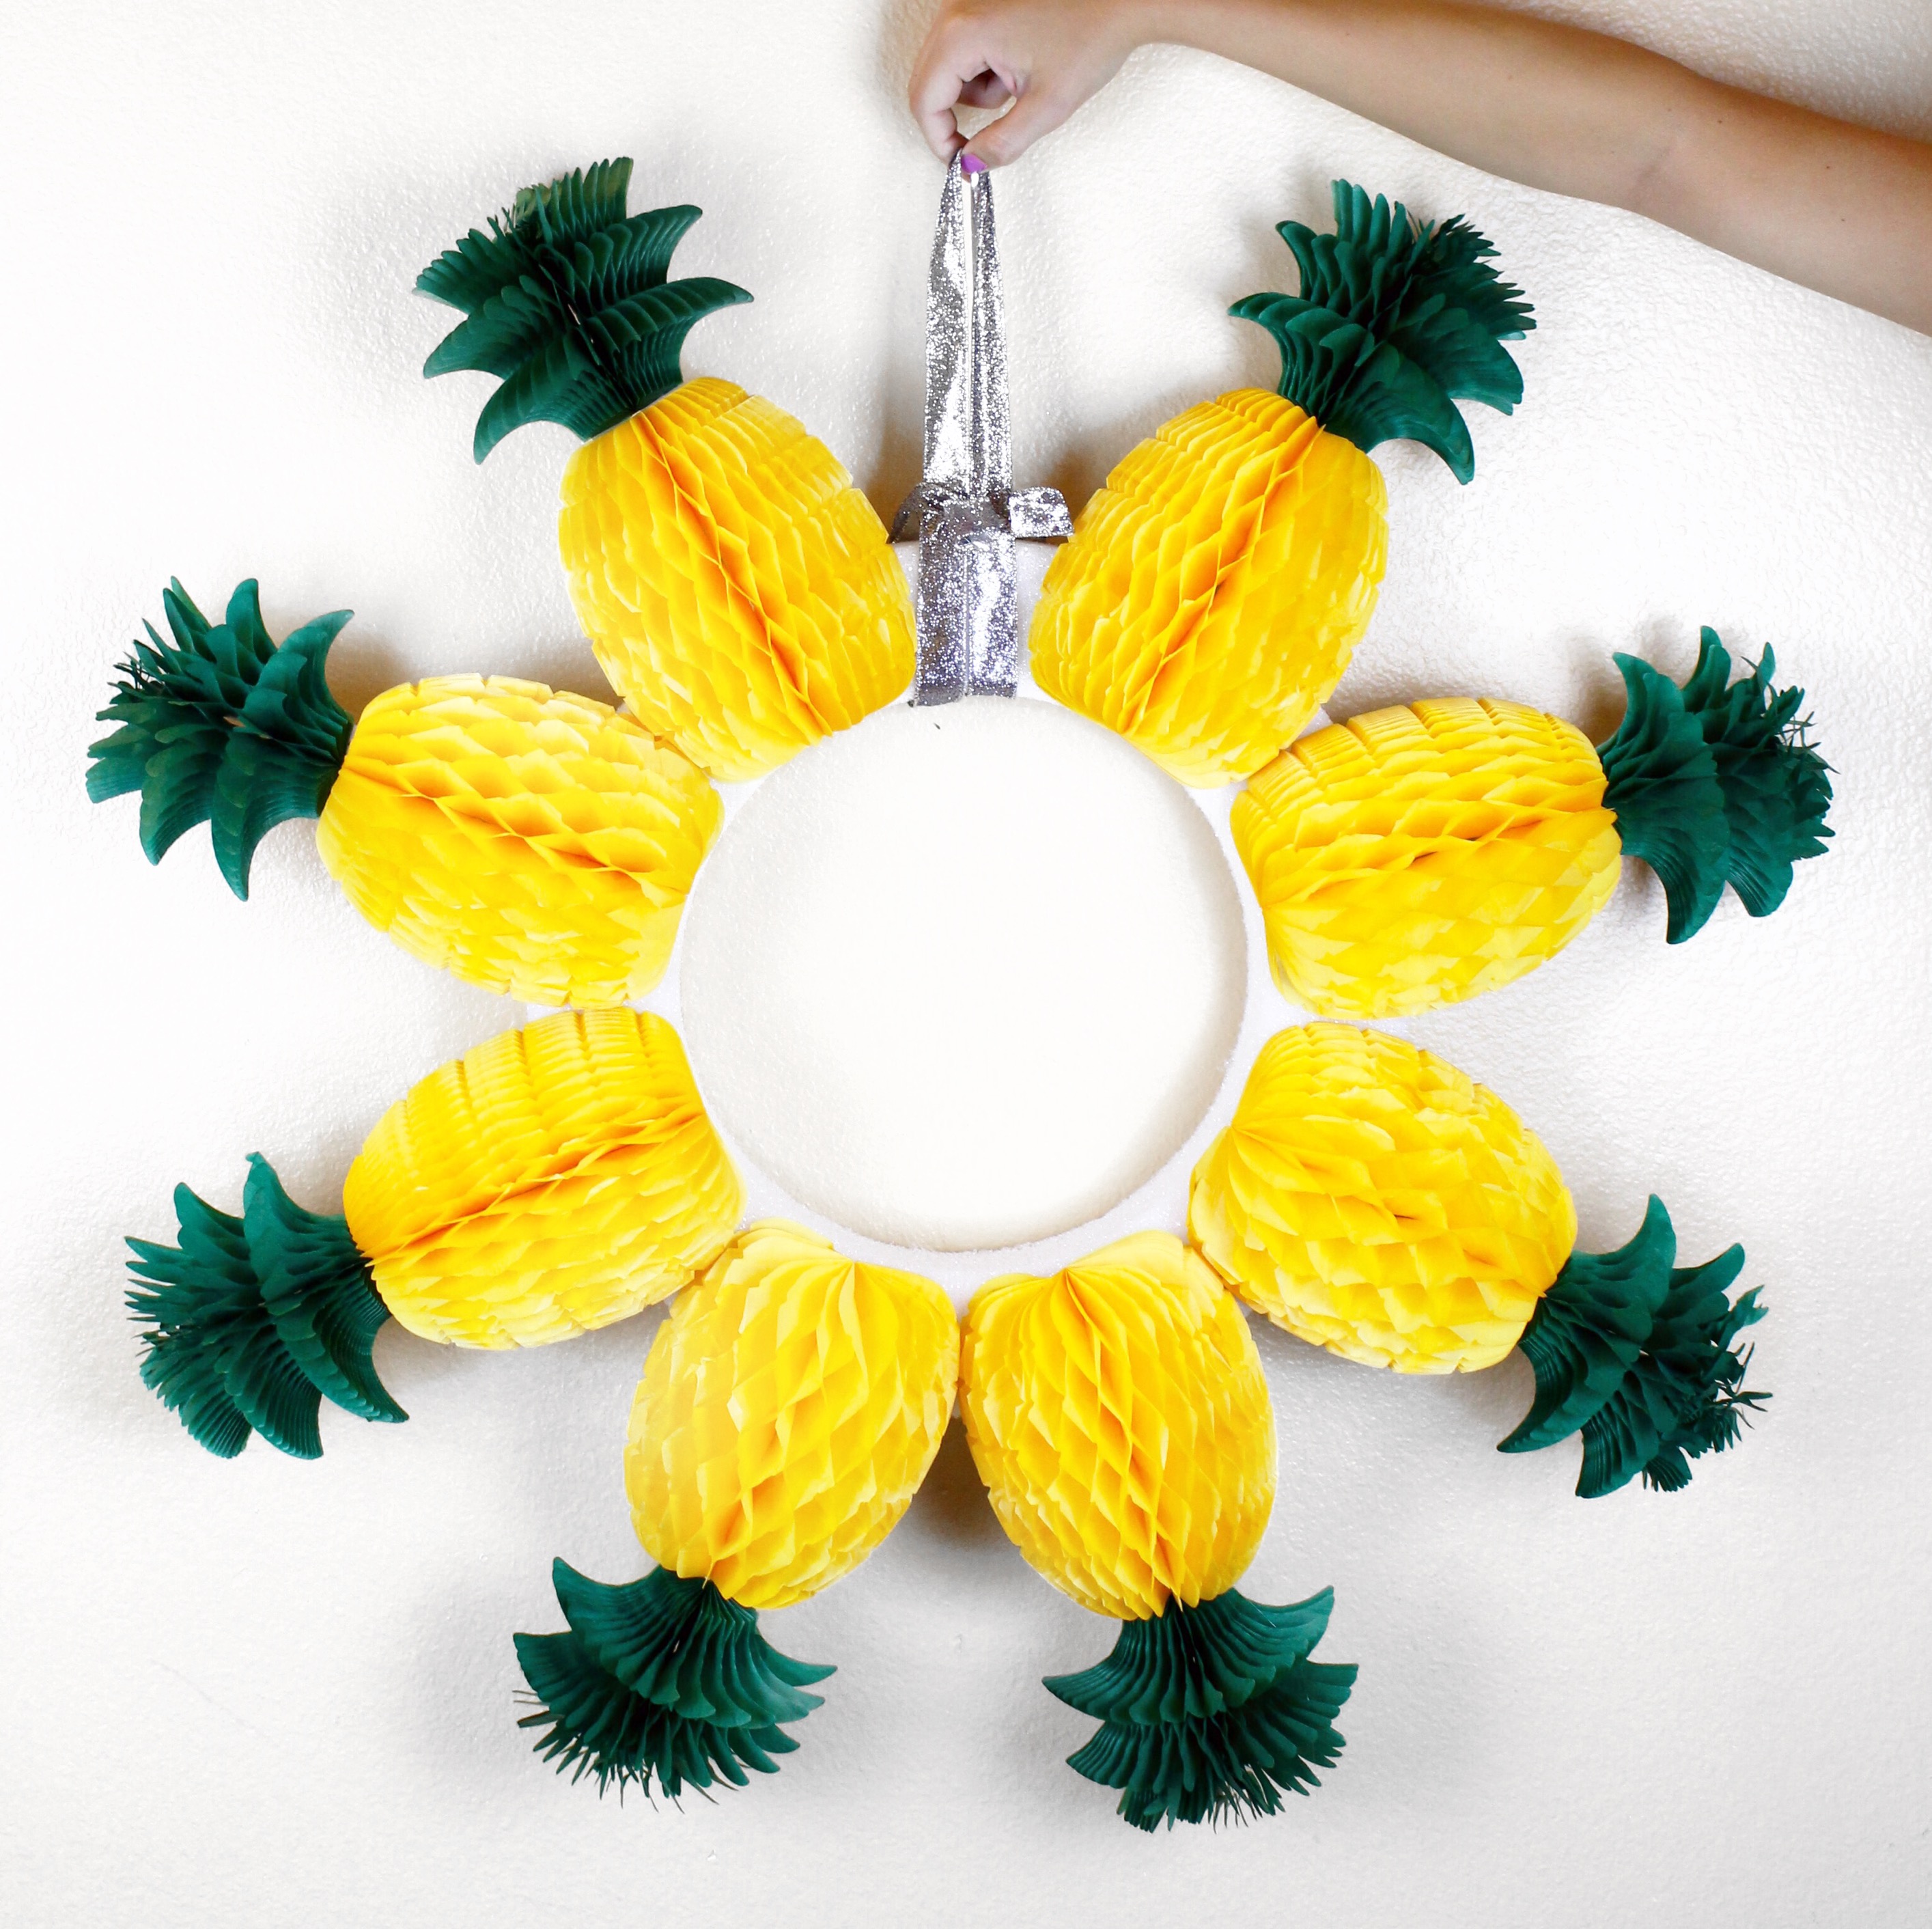 DIY honeycomb pineapple wreath (via twinspiration.co)